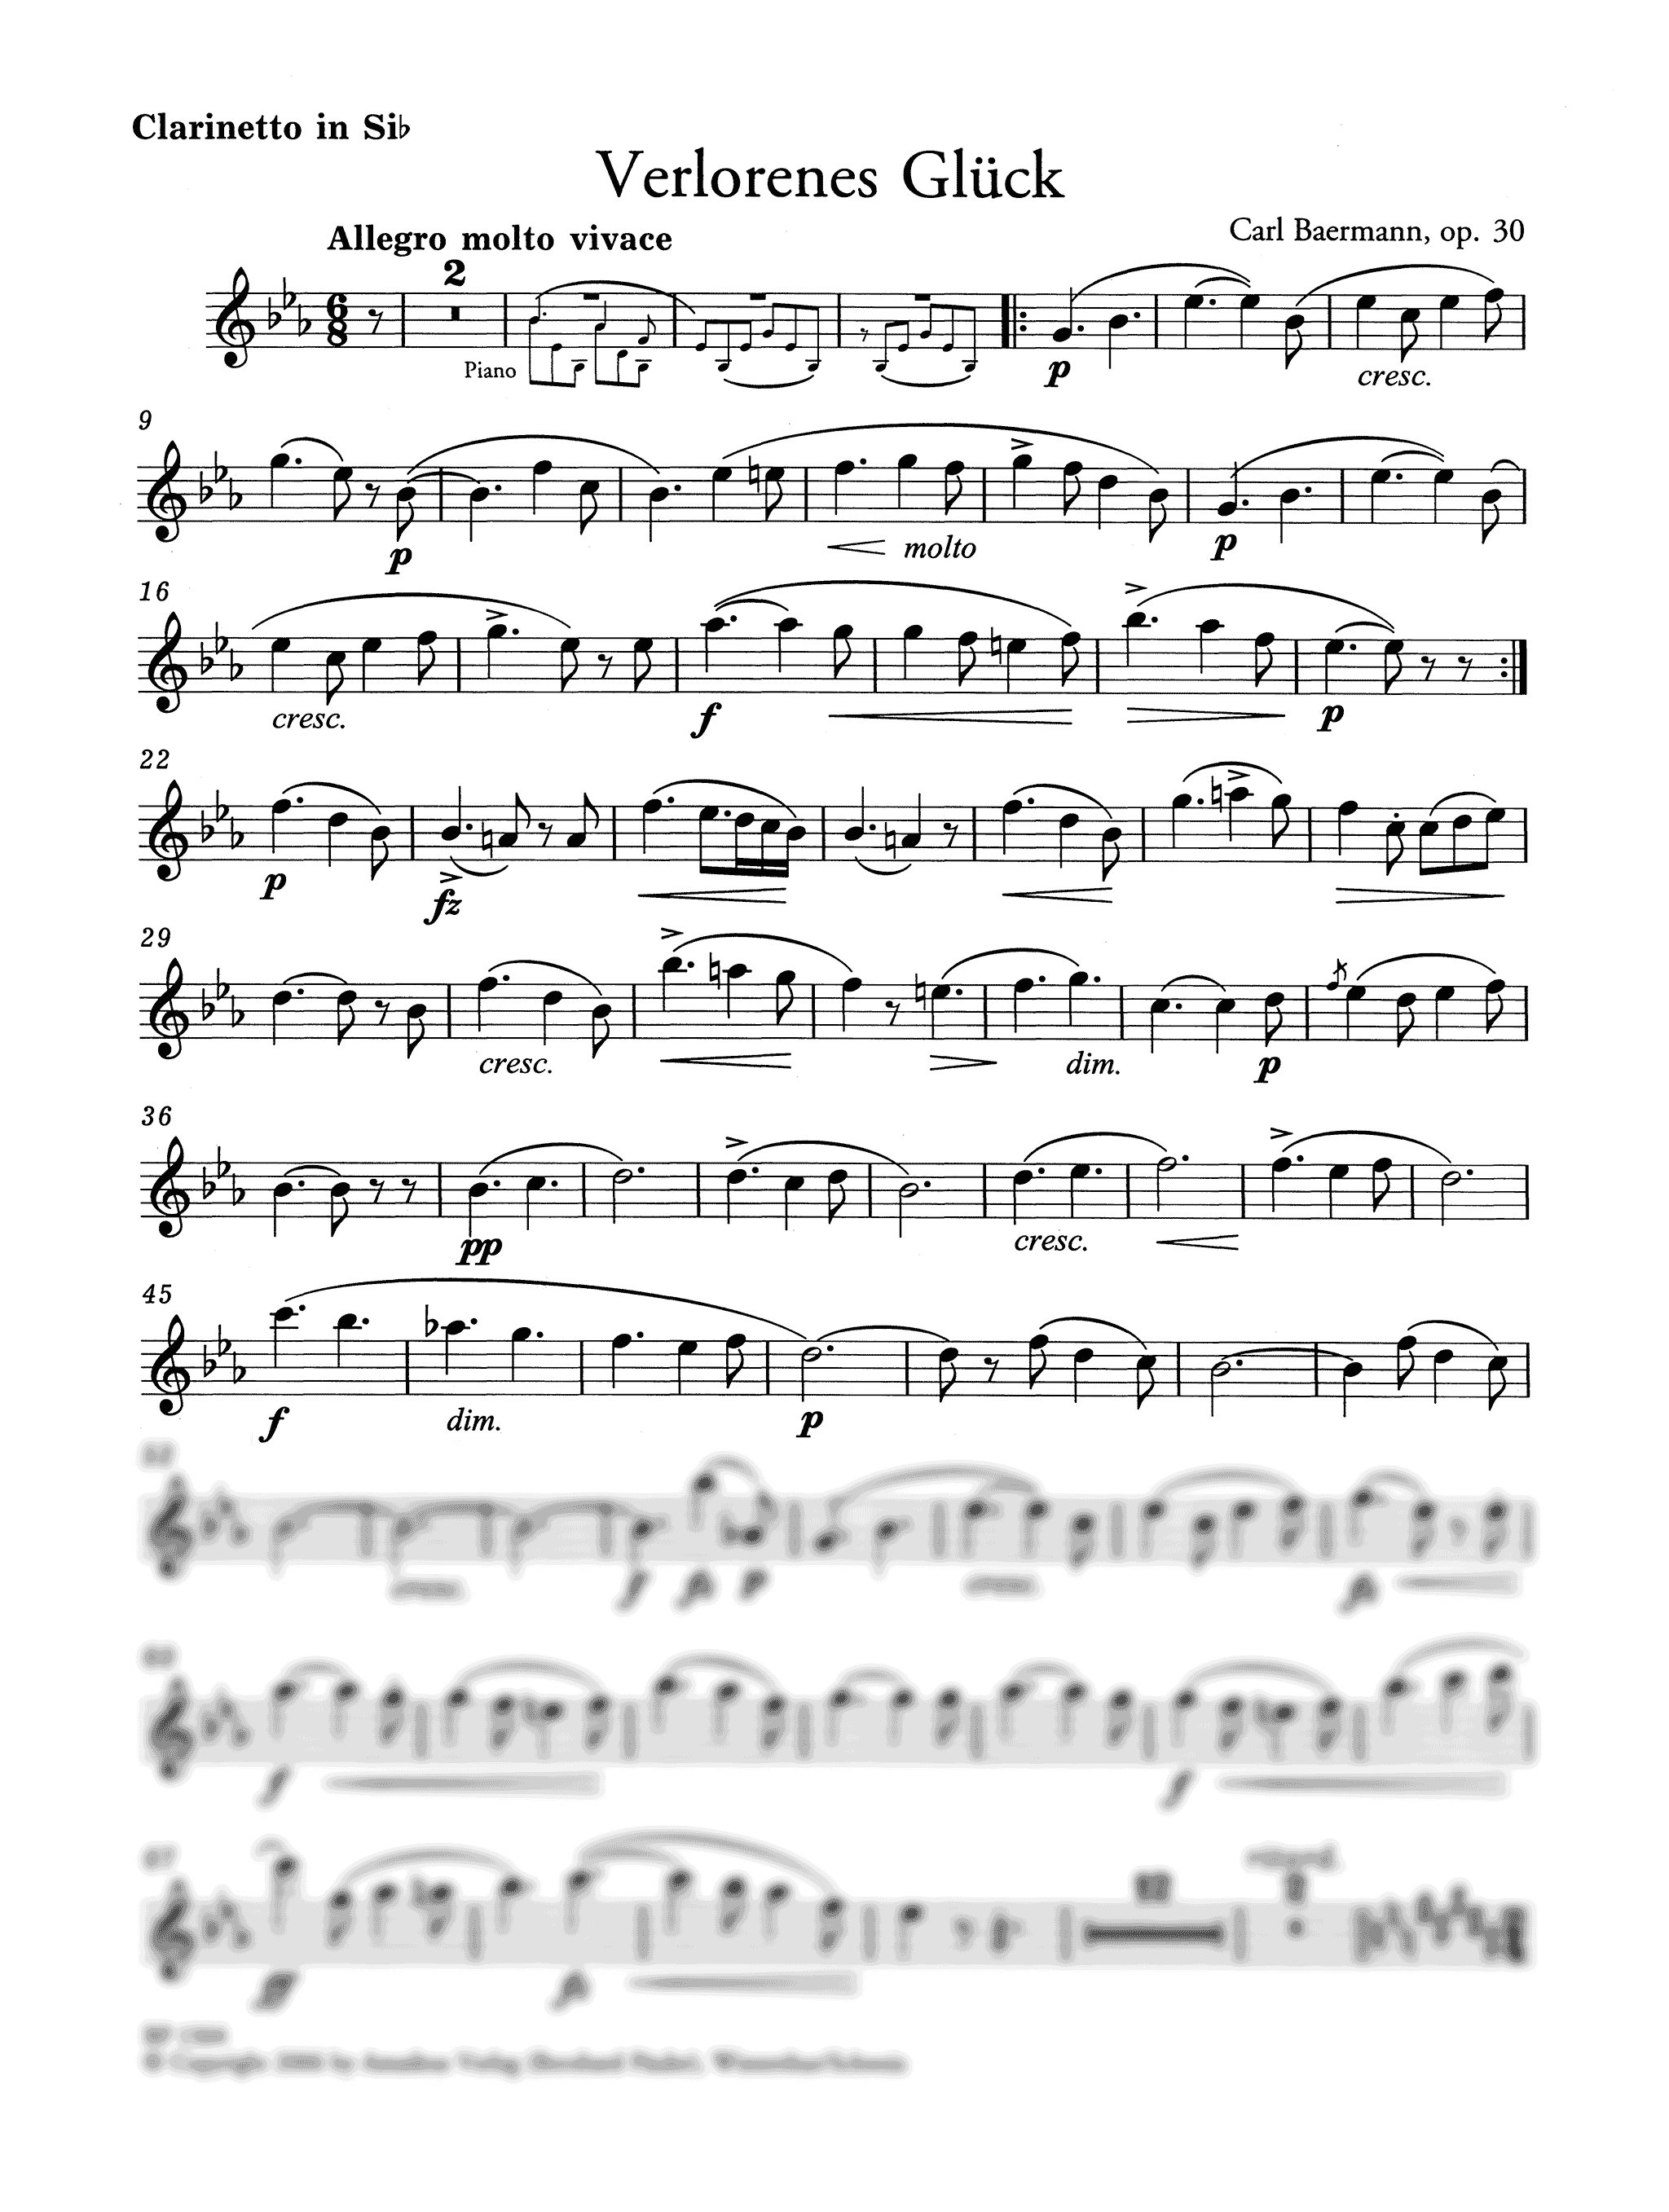 Carl Baermann Verlorenes Glück, Op. 30 clarinet and piano solo part